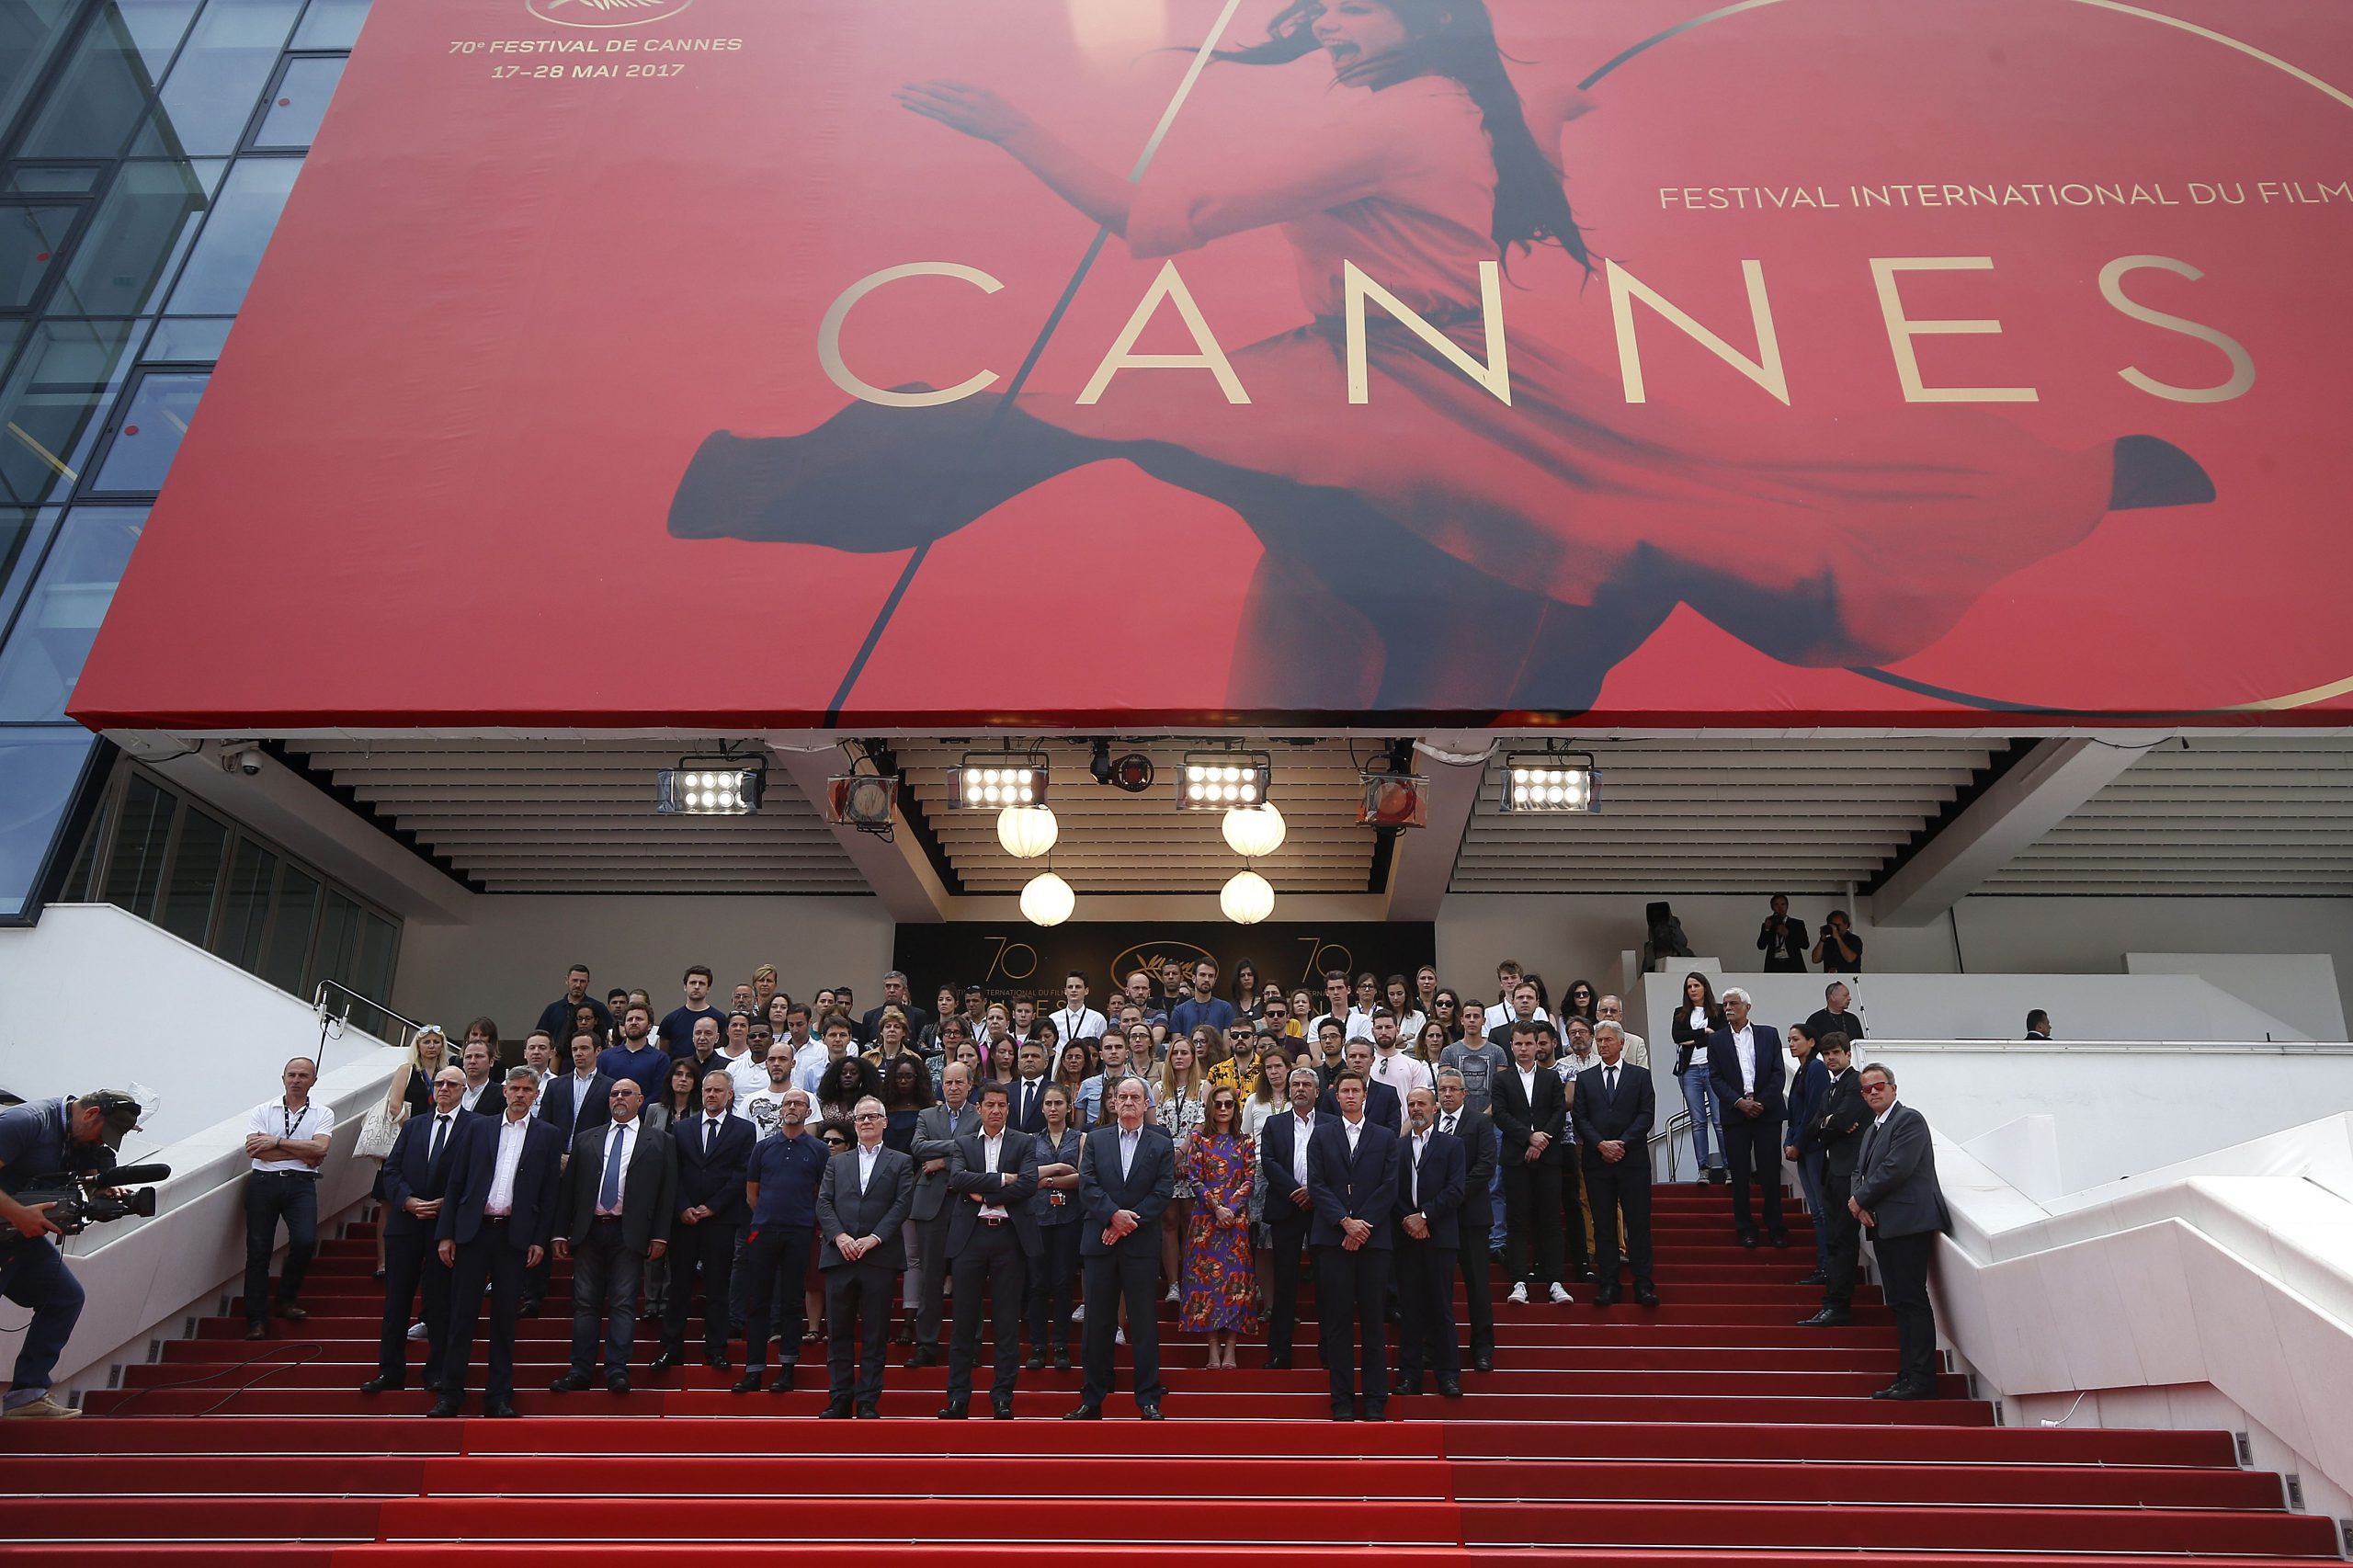 Cannes Film Festivll movie event